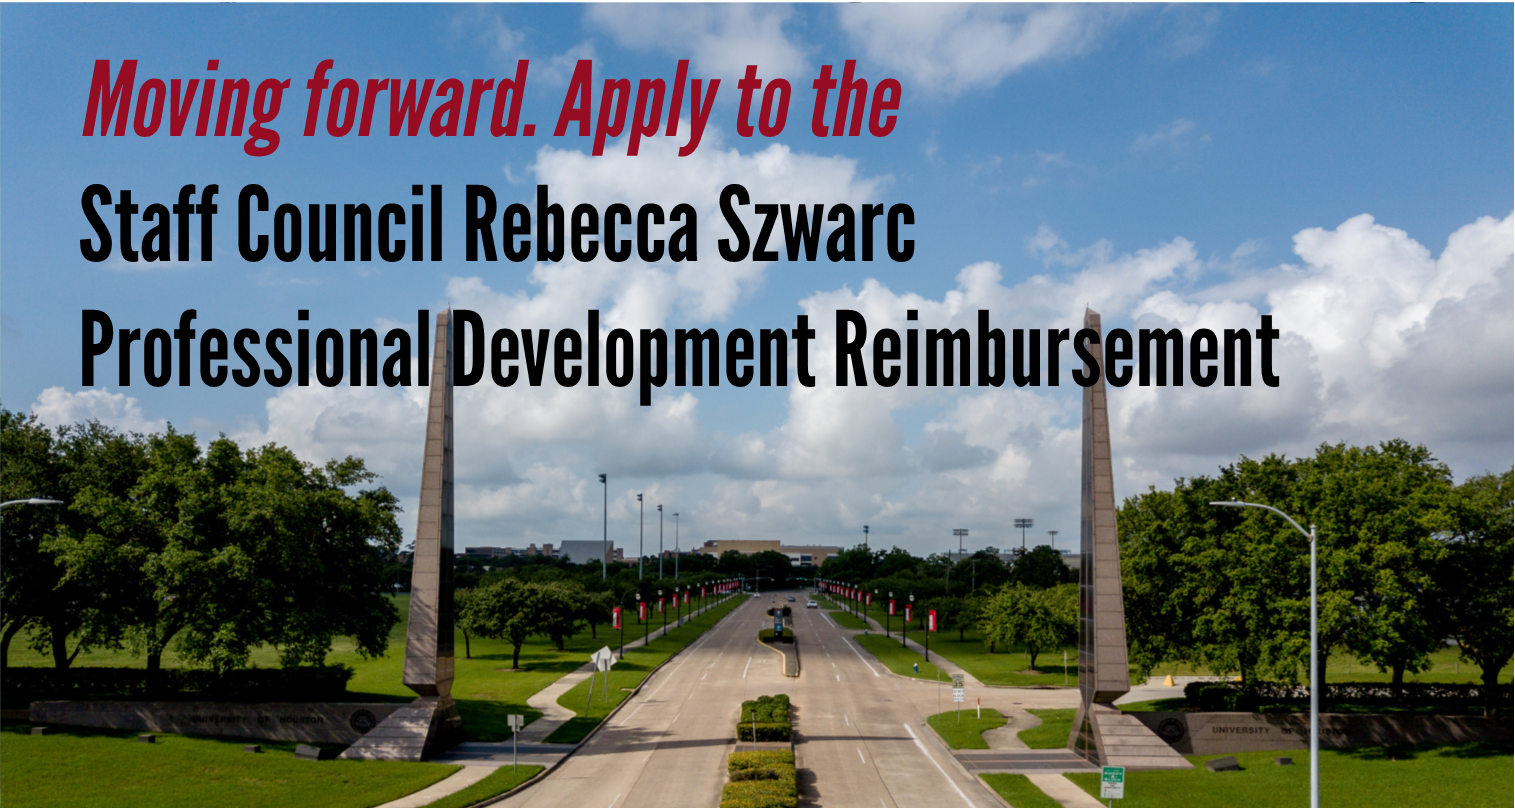 Staff Council Rebecca Szwarc Professional Development Reimbursement